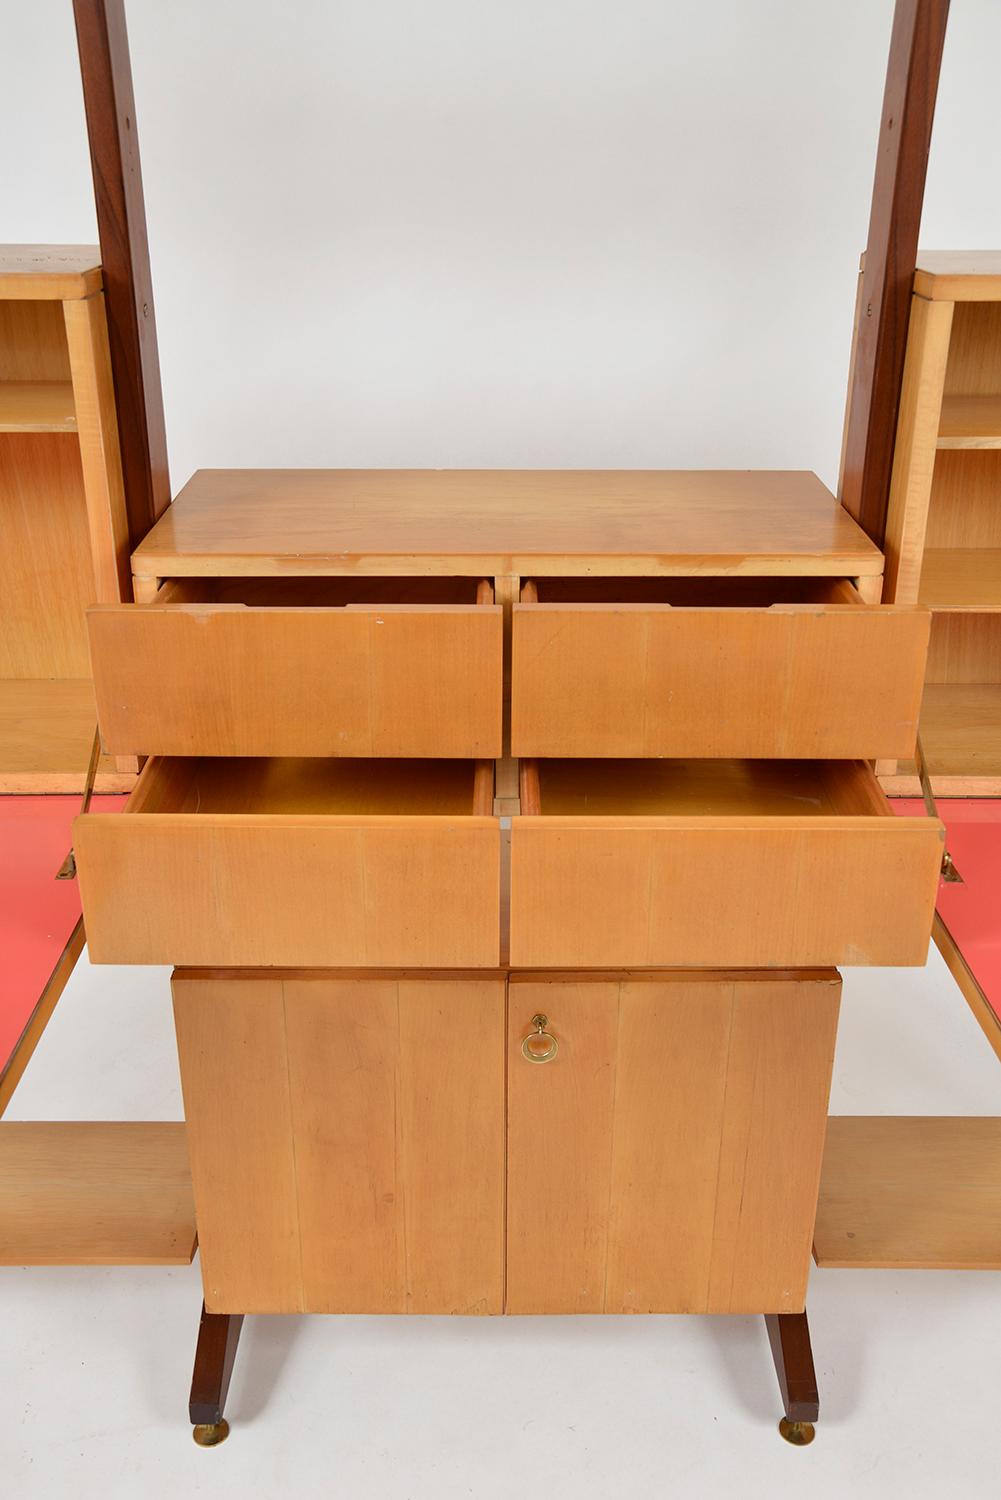 Large 1950s Italian Mid Century Teak Maple Freestanding Shelving System 18 Piece For Sale 6